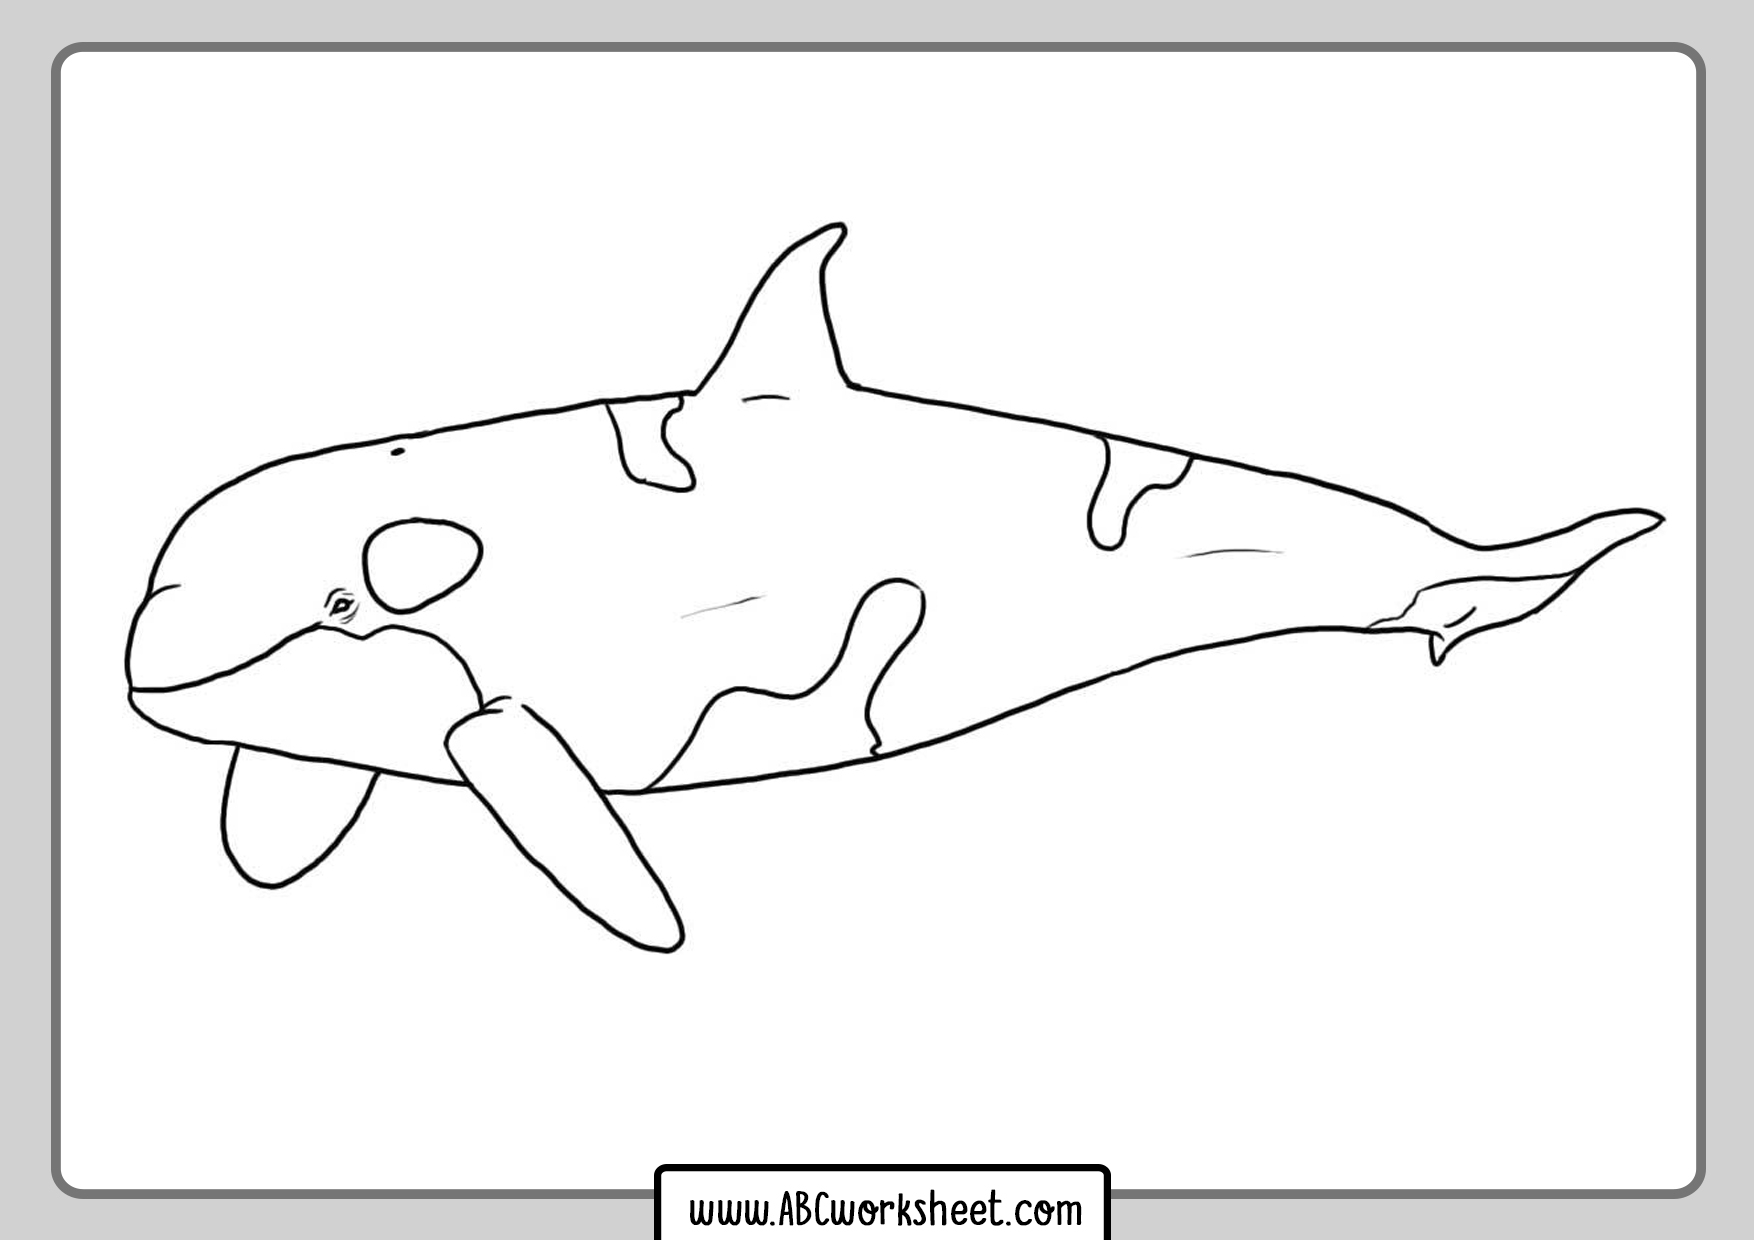 Рисунок синего кита поэтапно